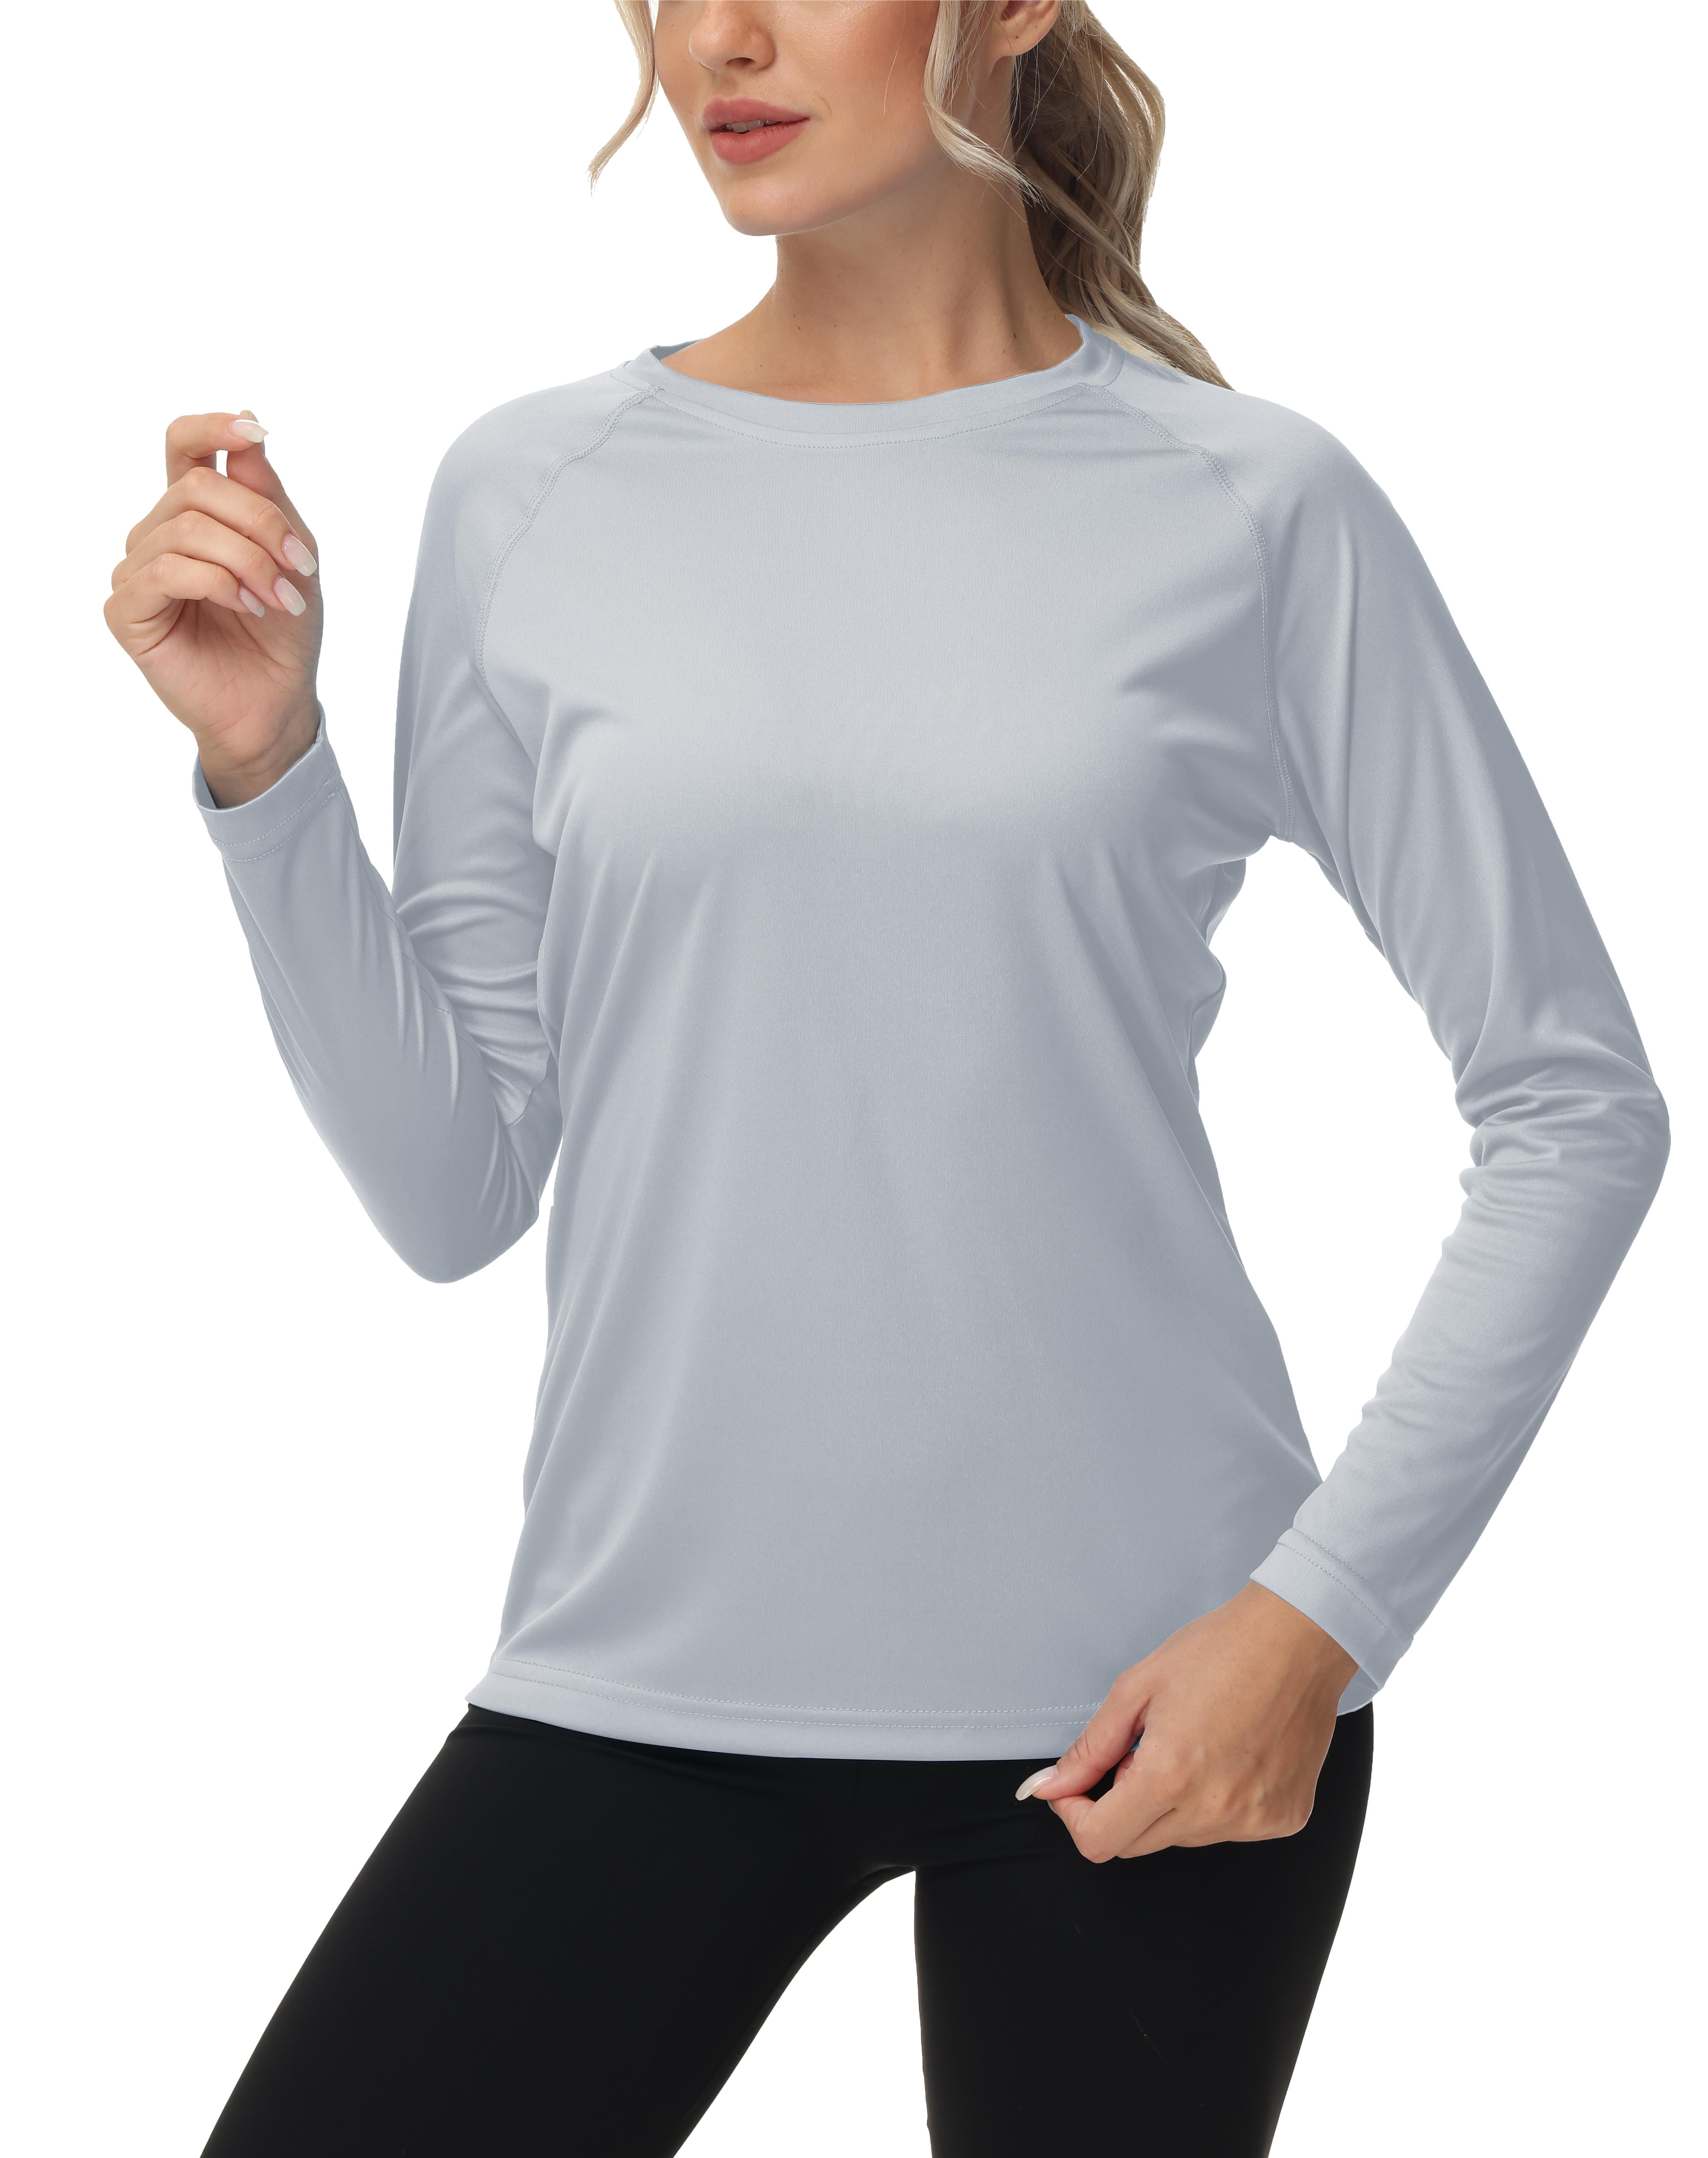 Women's Long Sleeve Swim Shirts Rash Guard Shirts UPF 50+ Sun Protection  Quick Dry Hiking T-Shirt Athletic Workout Running Tops Shirts SkyBlue L 